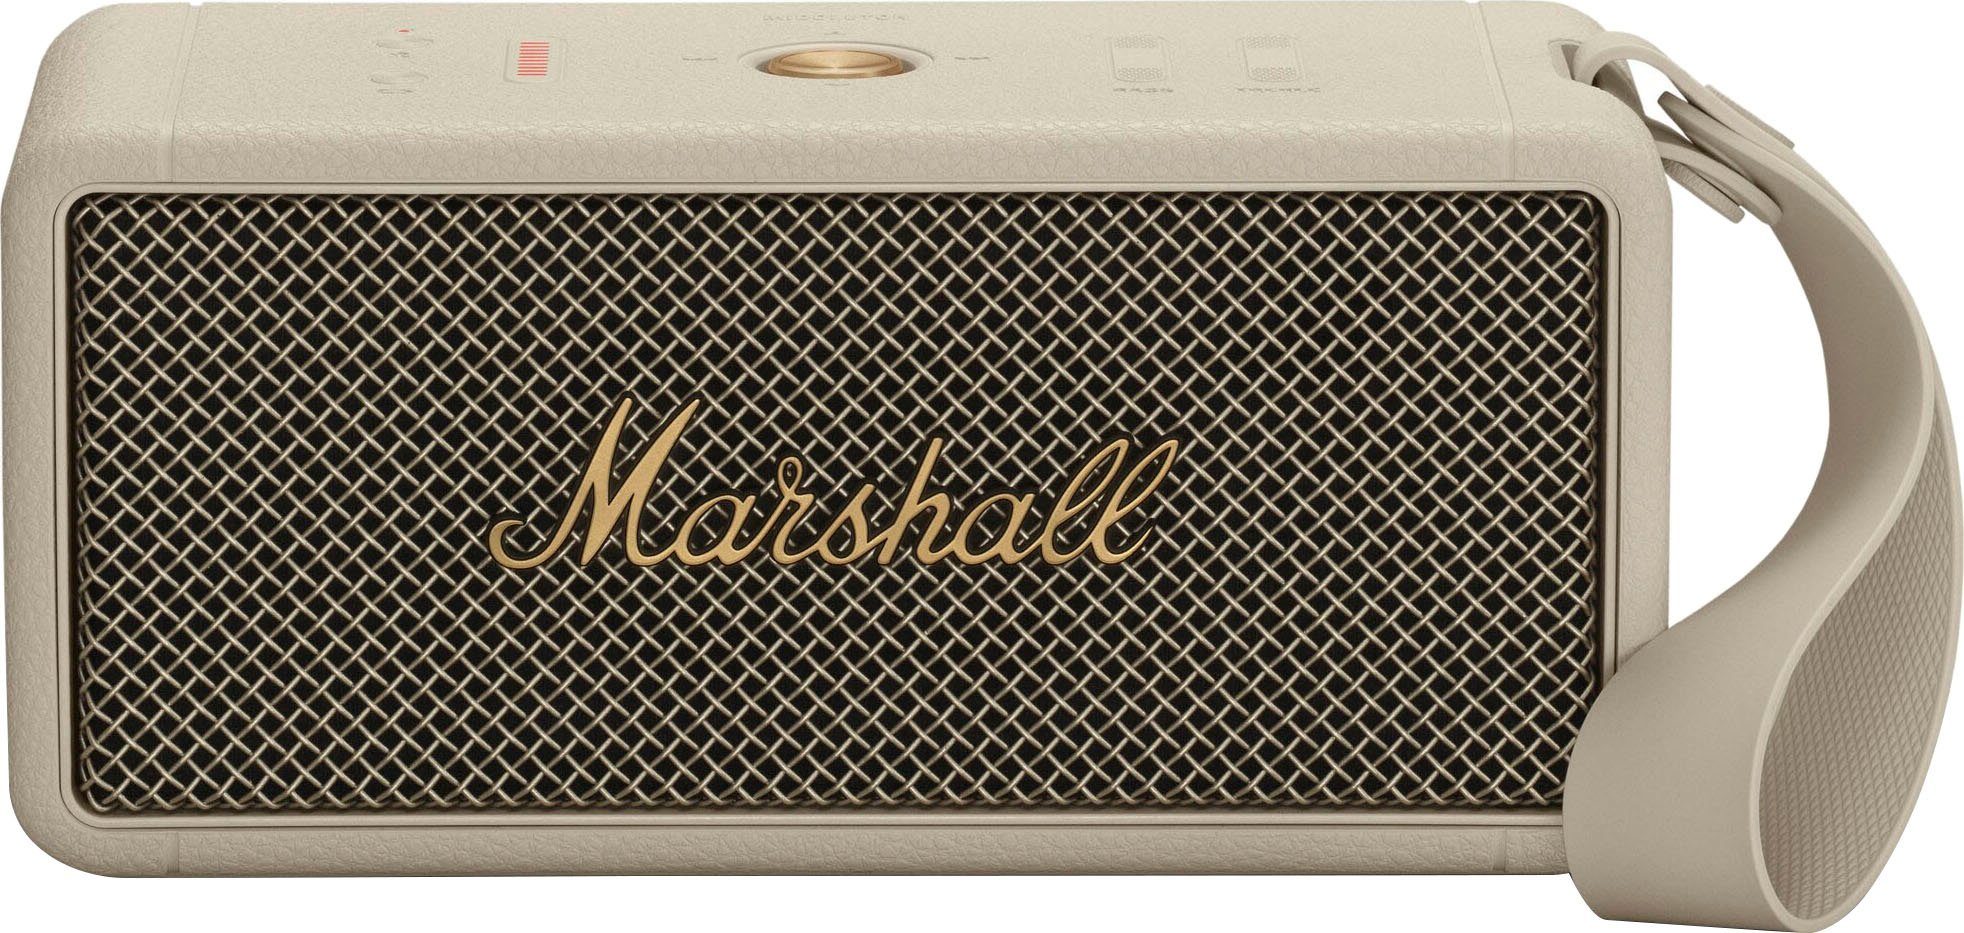 Marshall Middleton Stereo Lautsprecher (Bluetooth, 110 W) Cream | Lautsprecher